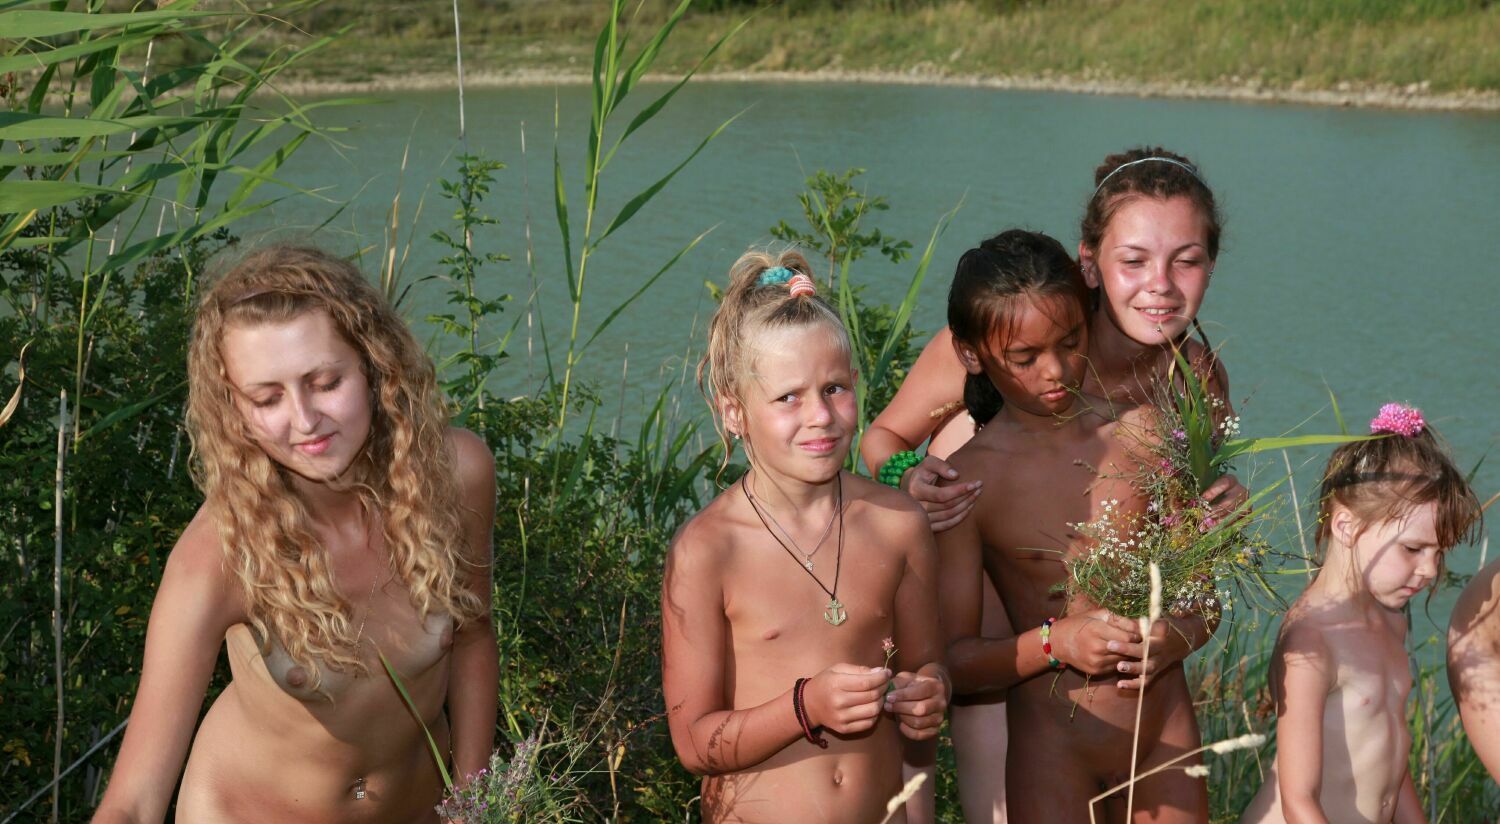 Family nudist pics - Purenudism young nudists [Watermelon marsh]